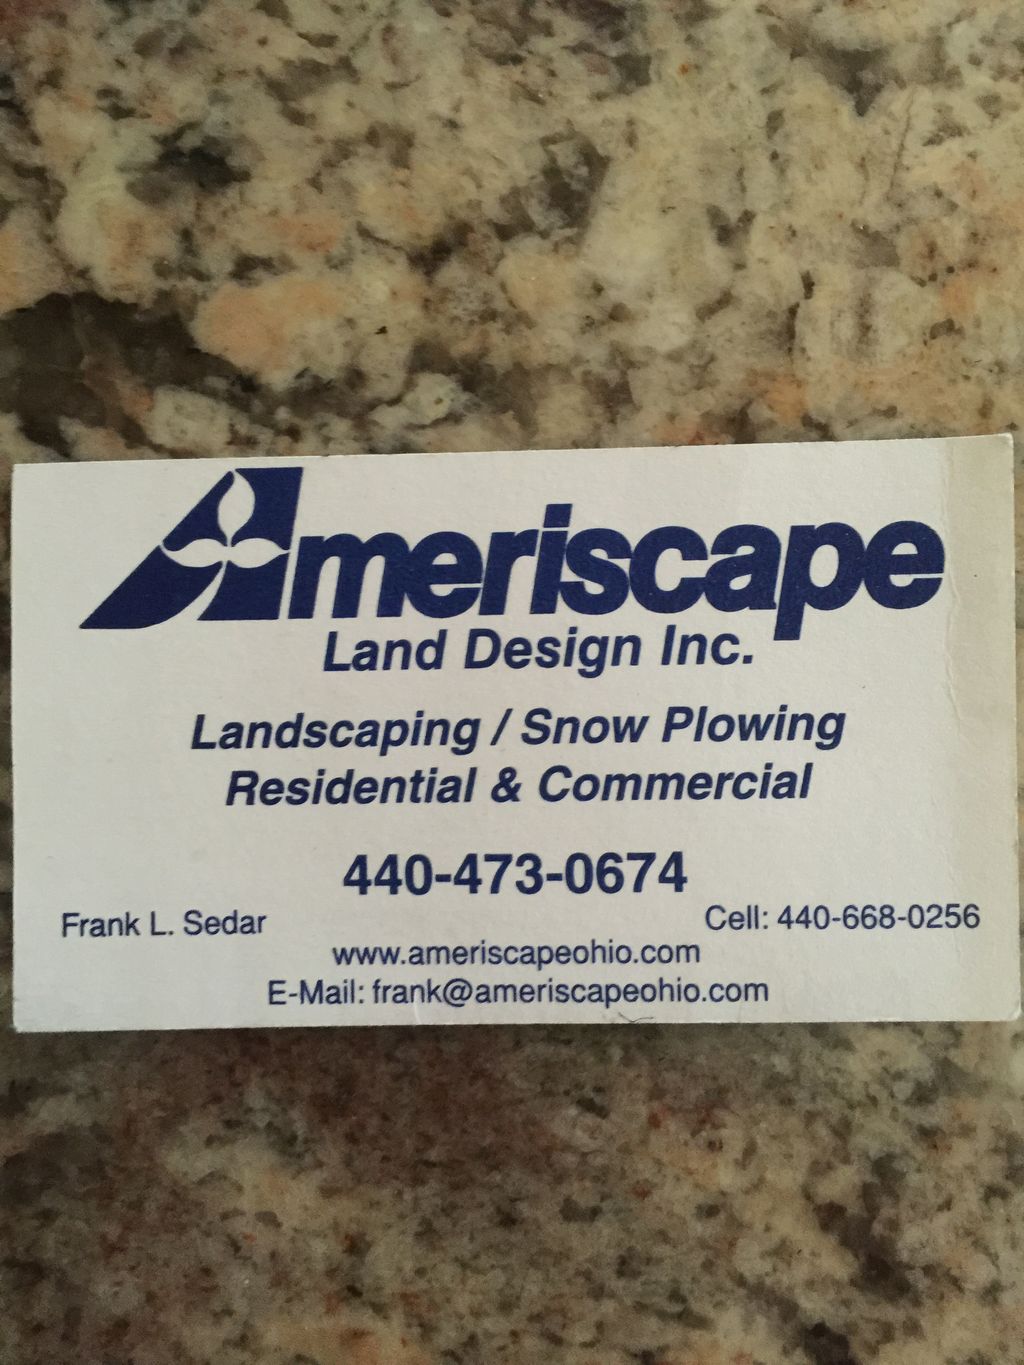 Ameriscape Land Design, Inc.